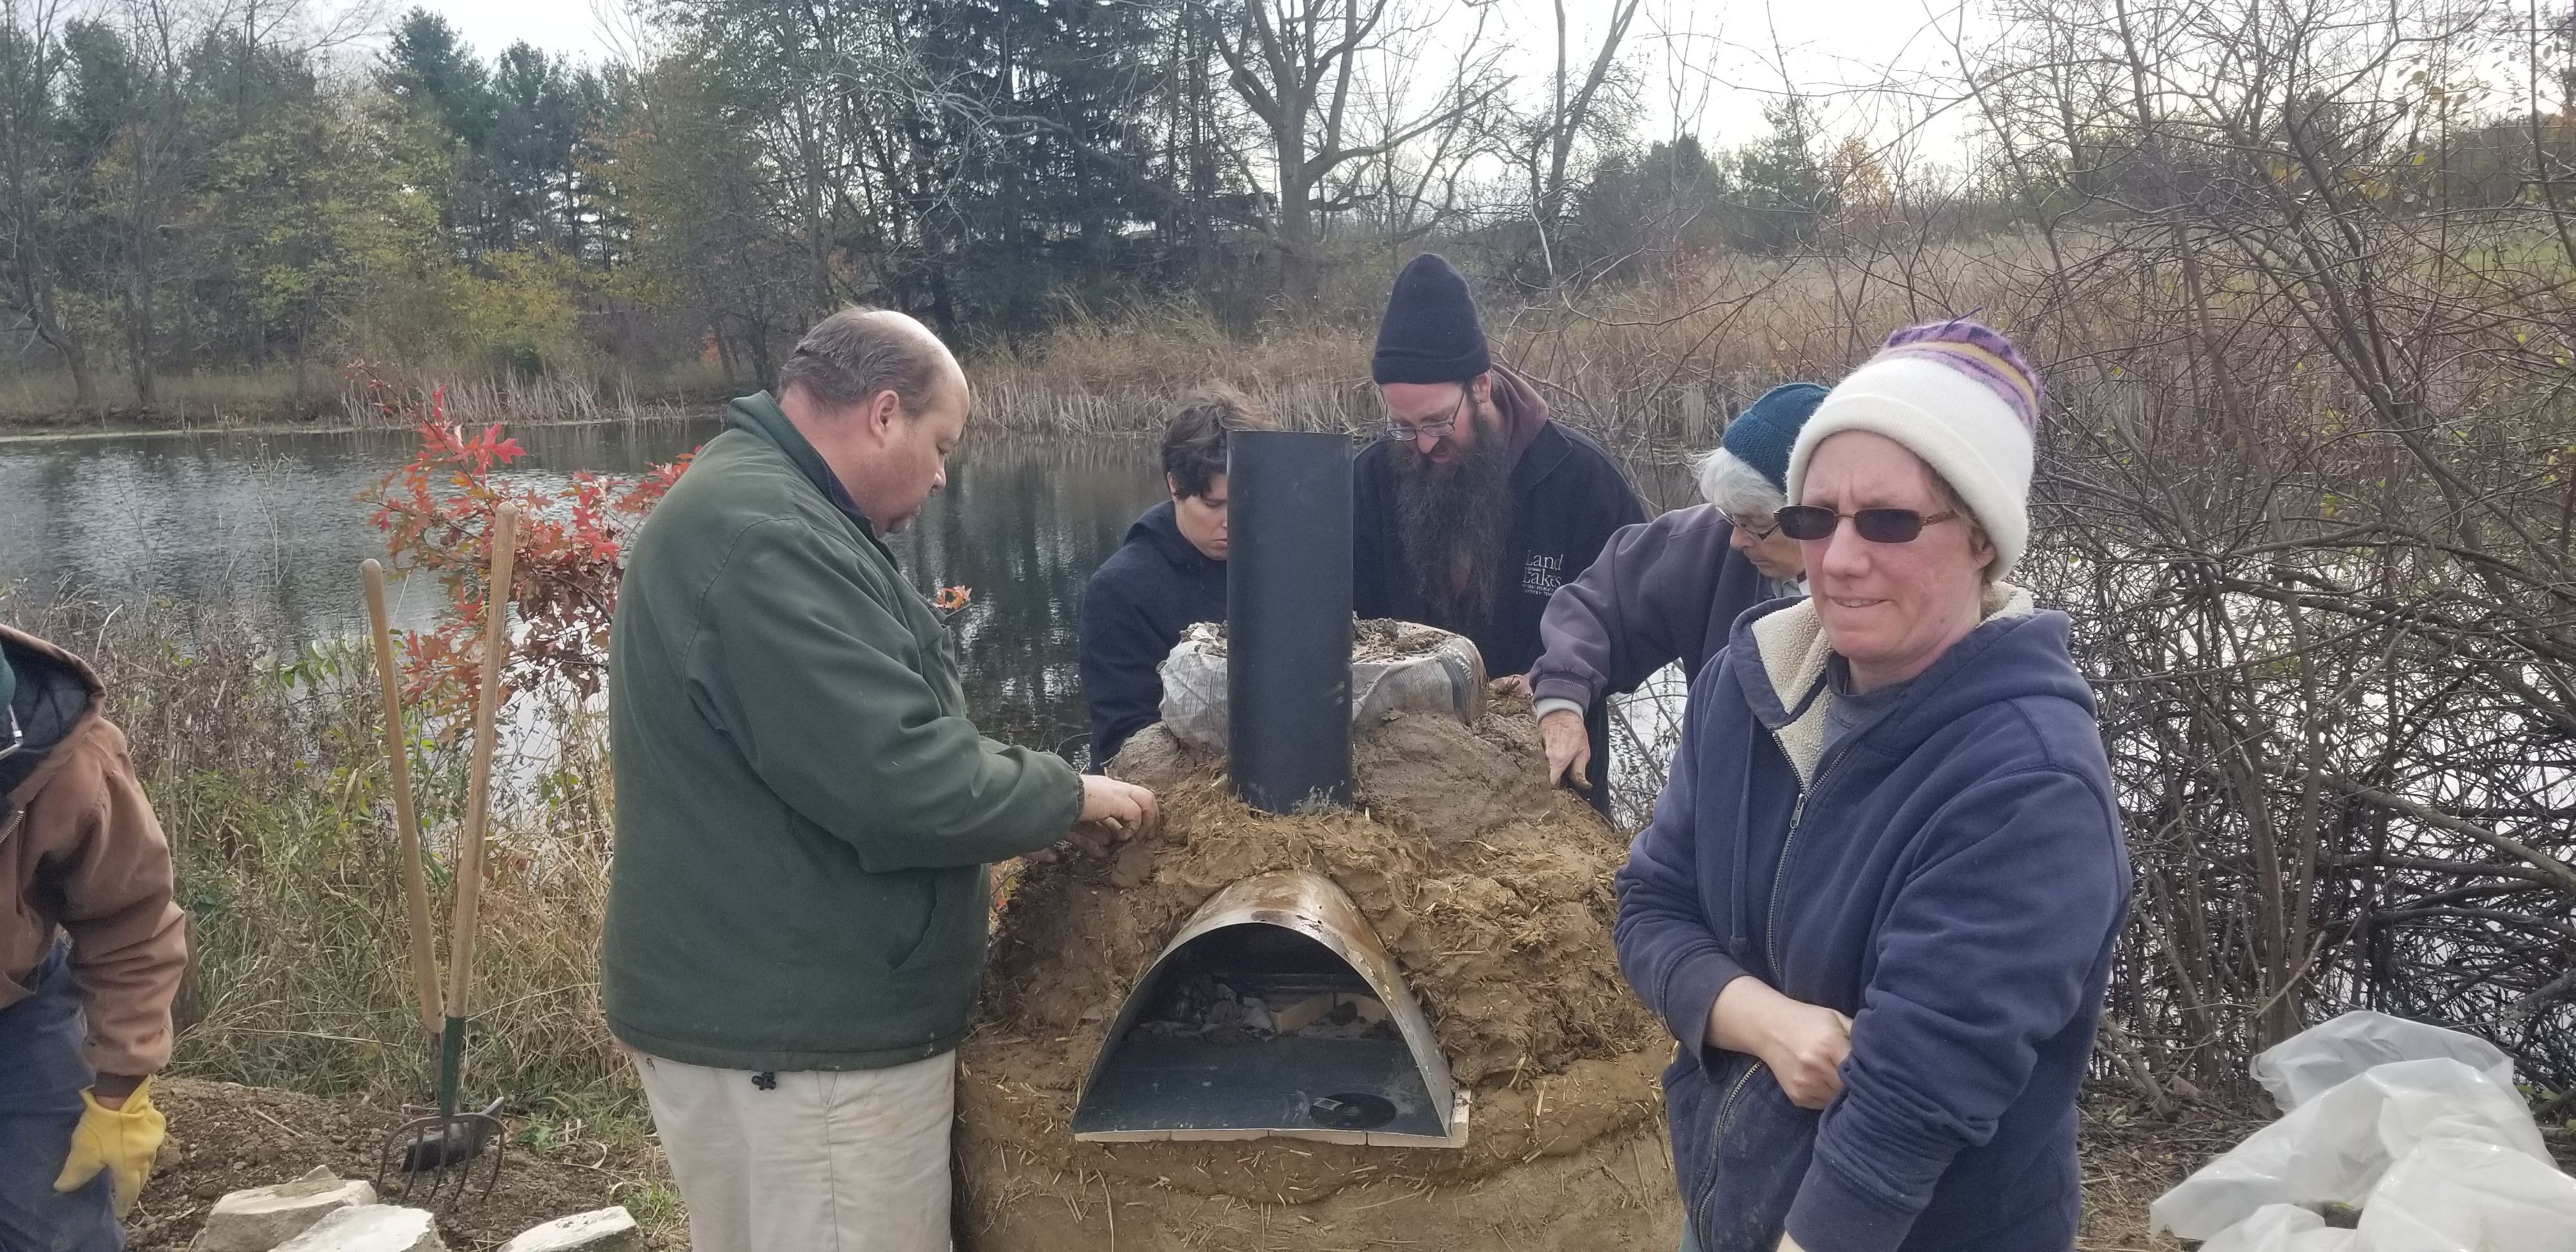 Building the earthen cob oven